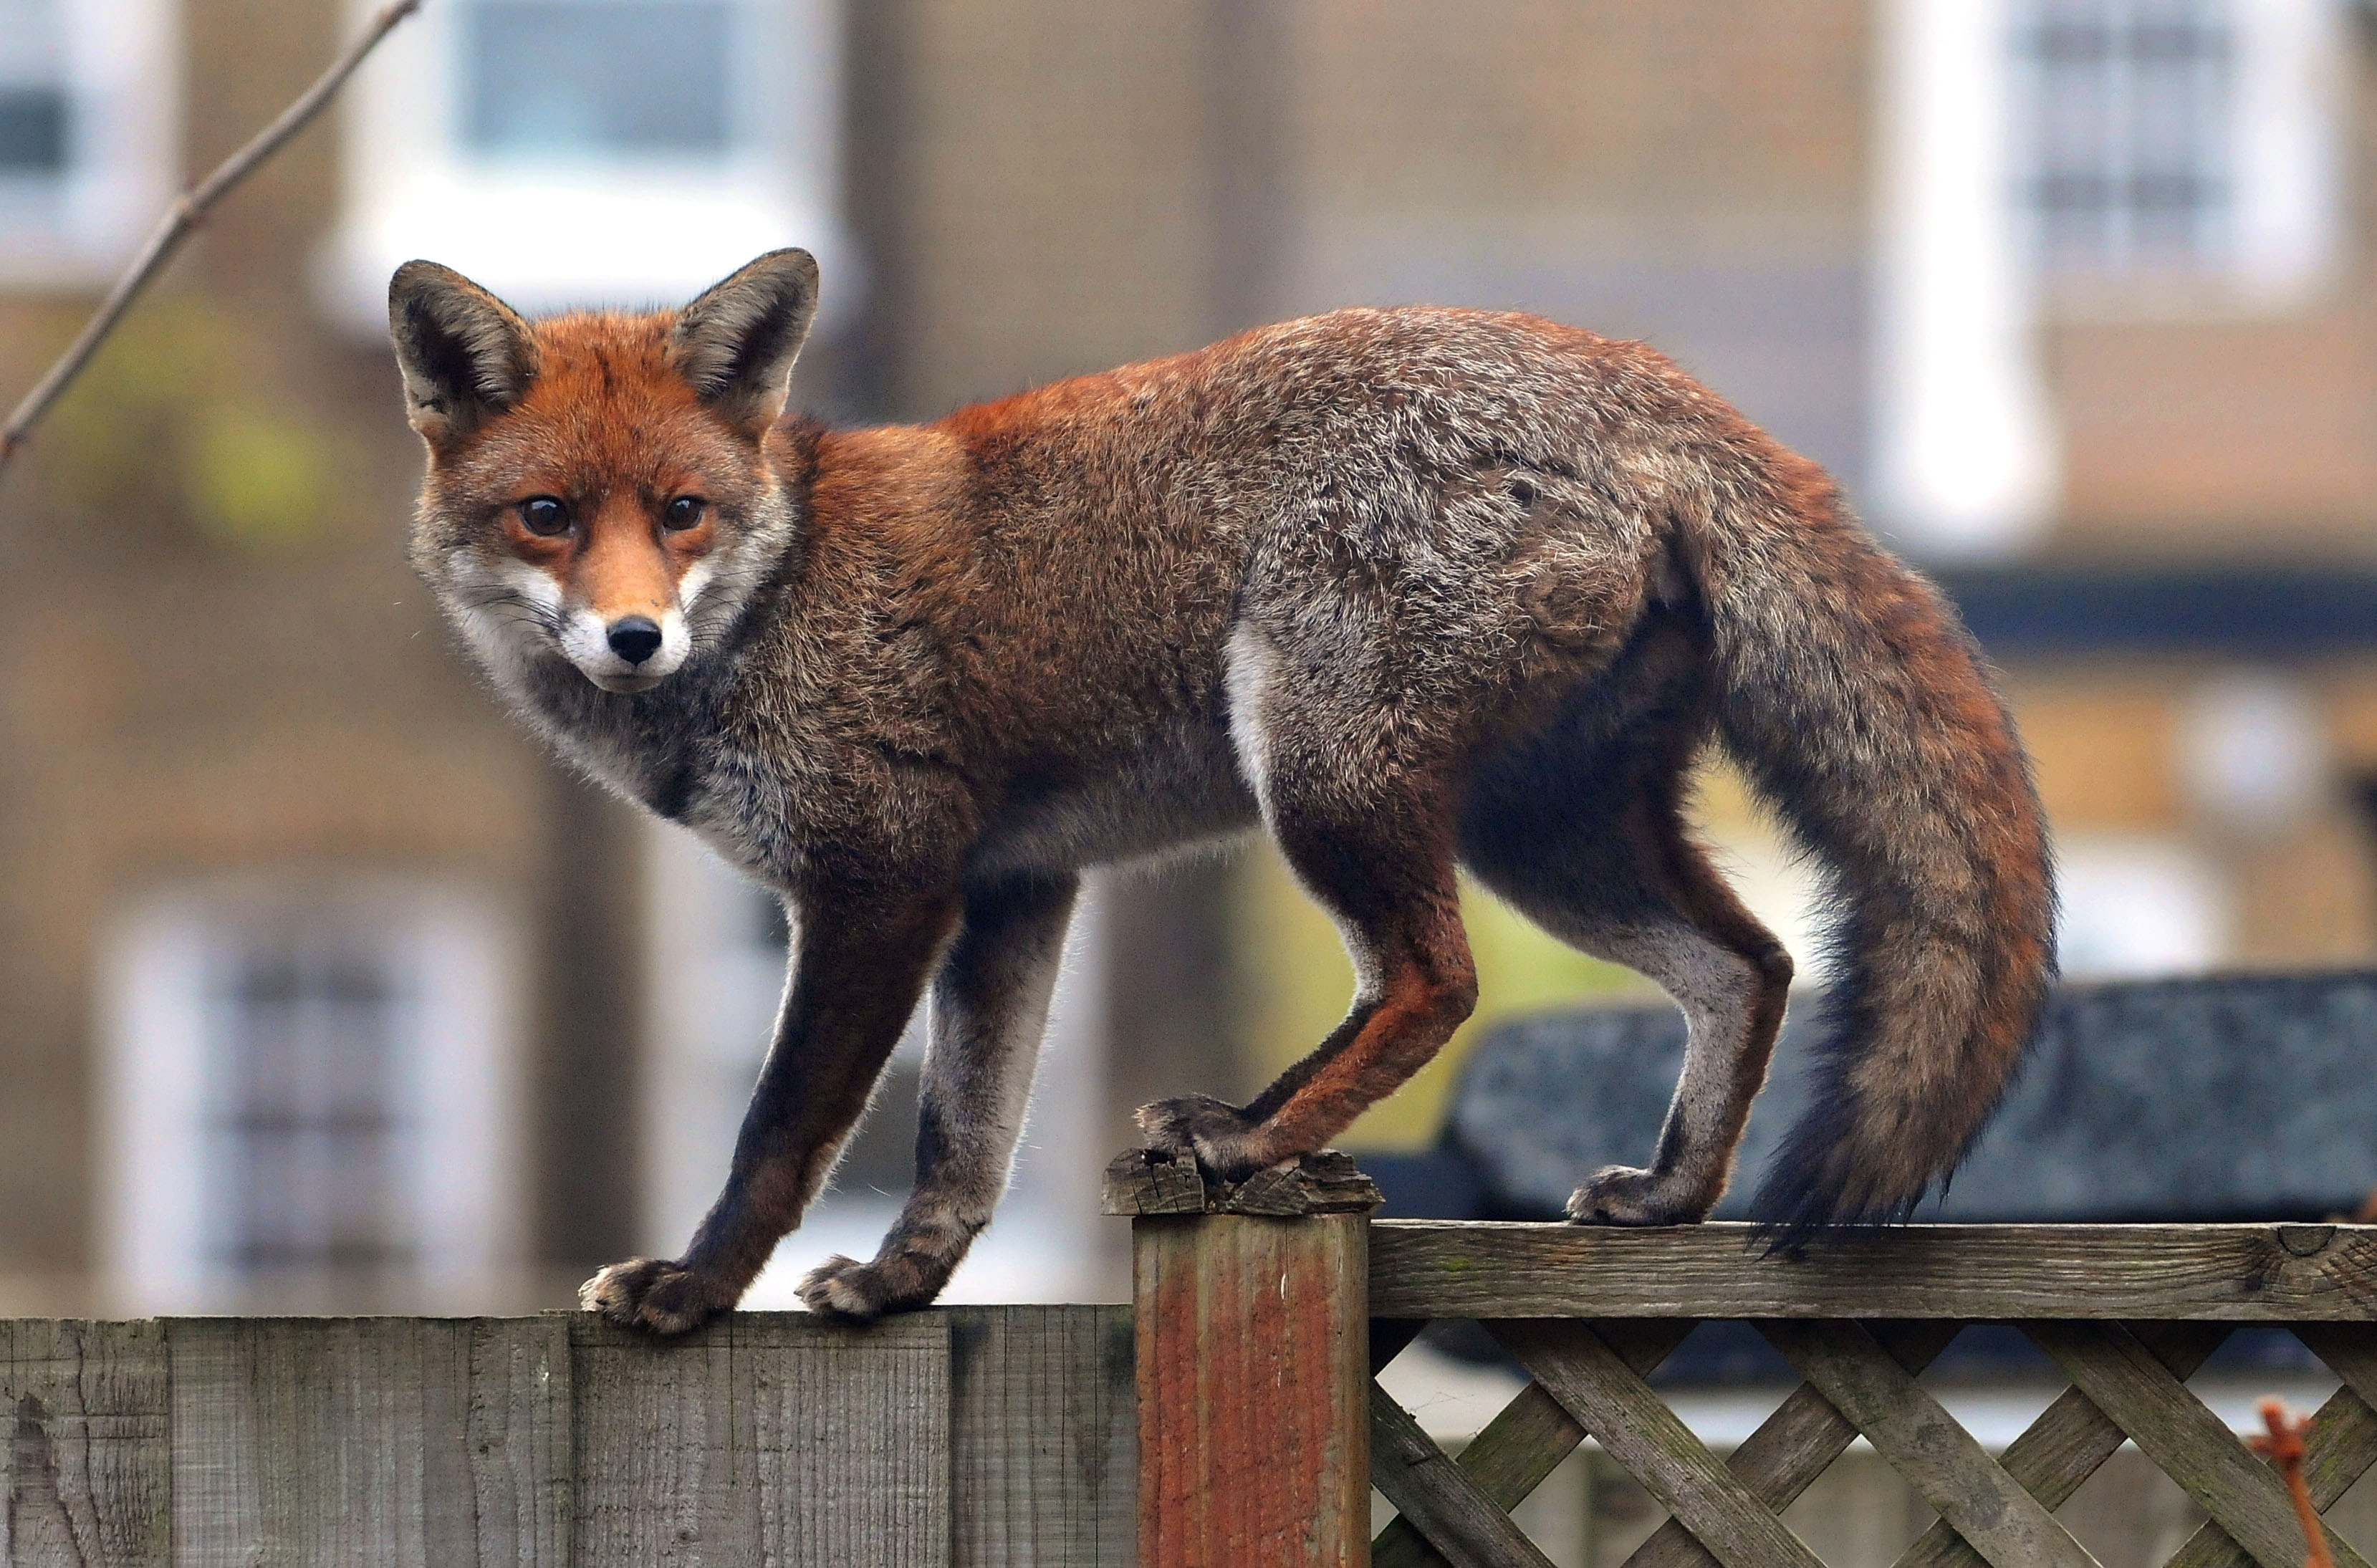 An urban fox prowls along a garden fence in Ealing in London, England. (Jim Dyson&mdash;Getty Images)